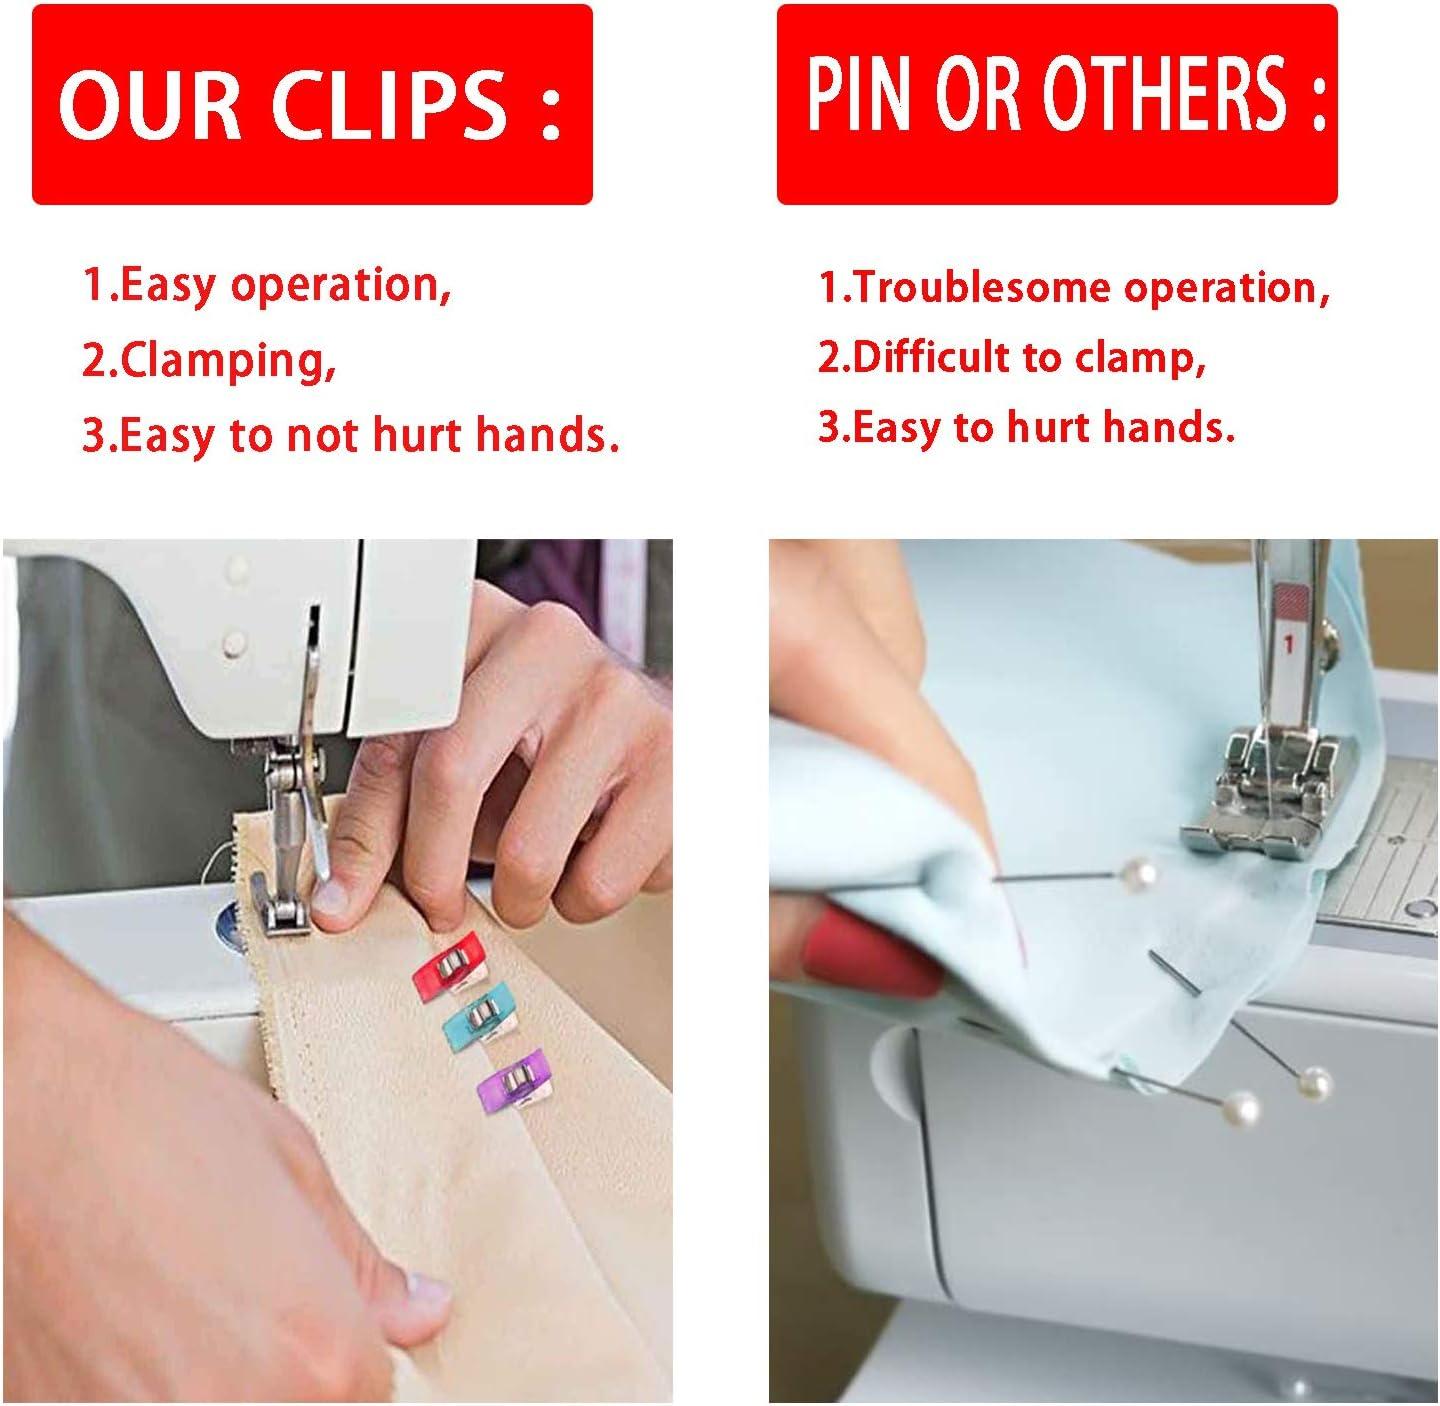 Sewing Clips vs. Pins